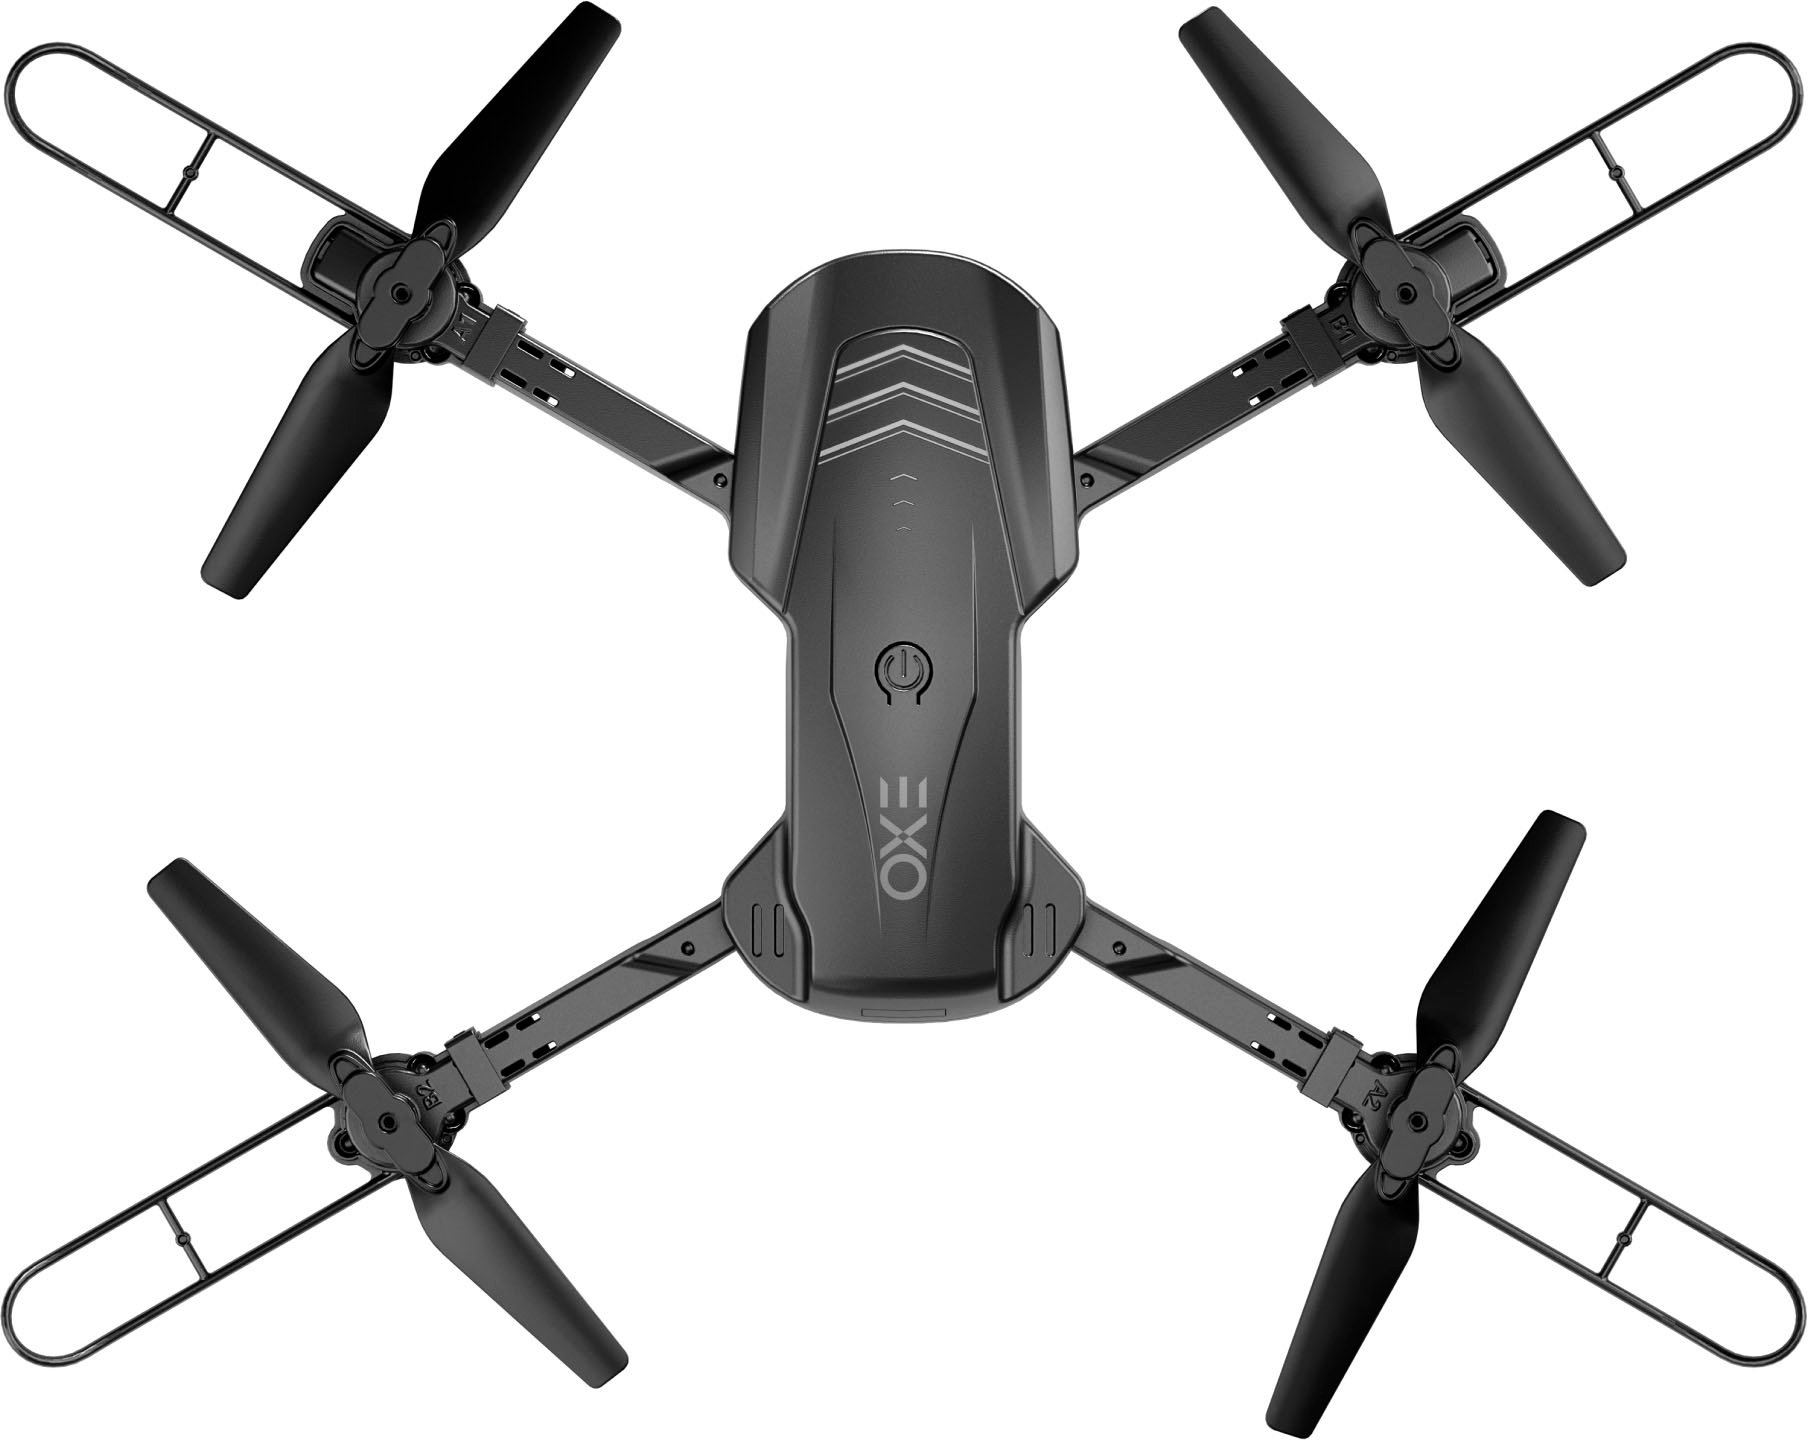 All-Weather Wind Resistant Drones, Dark Drone